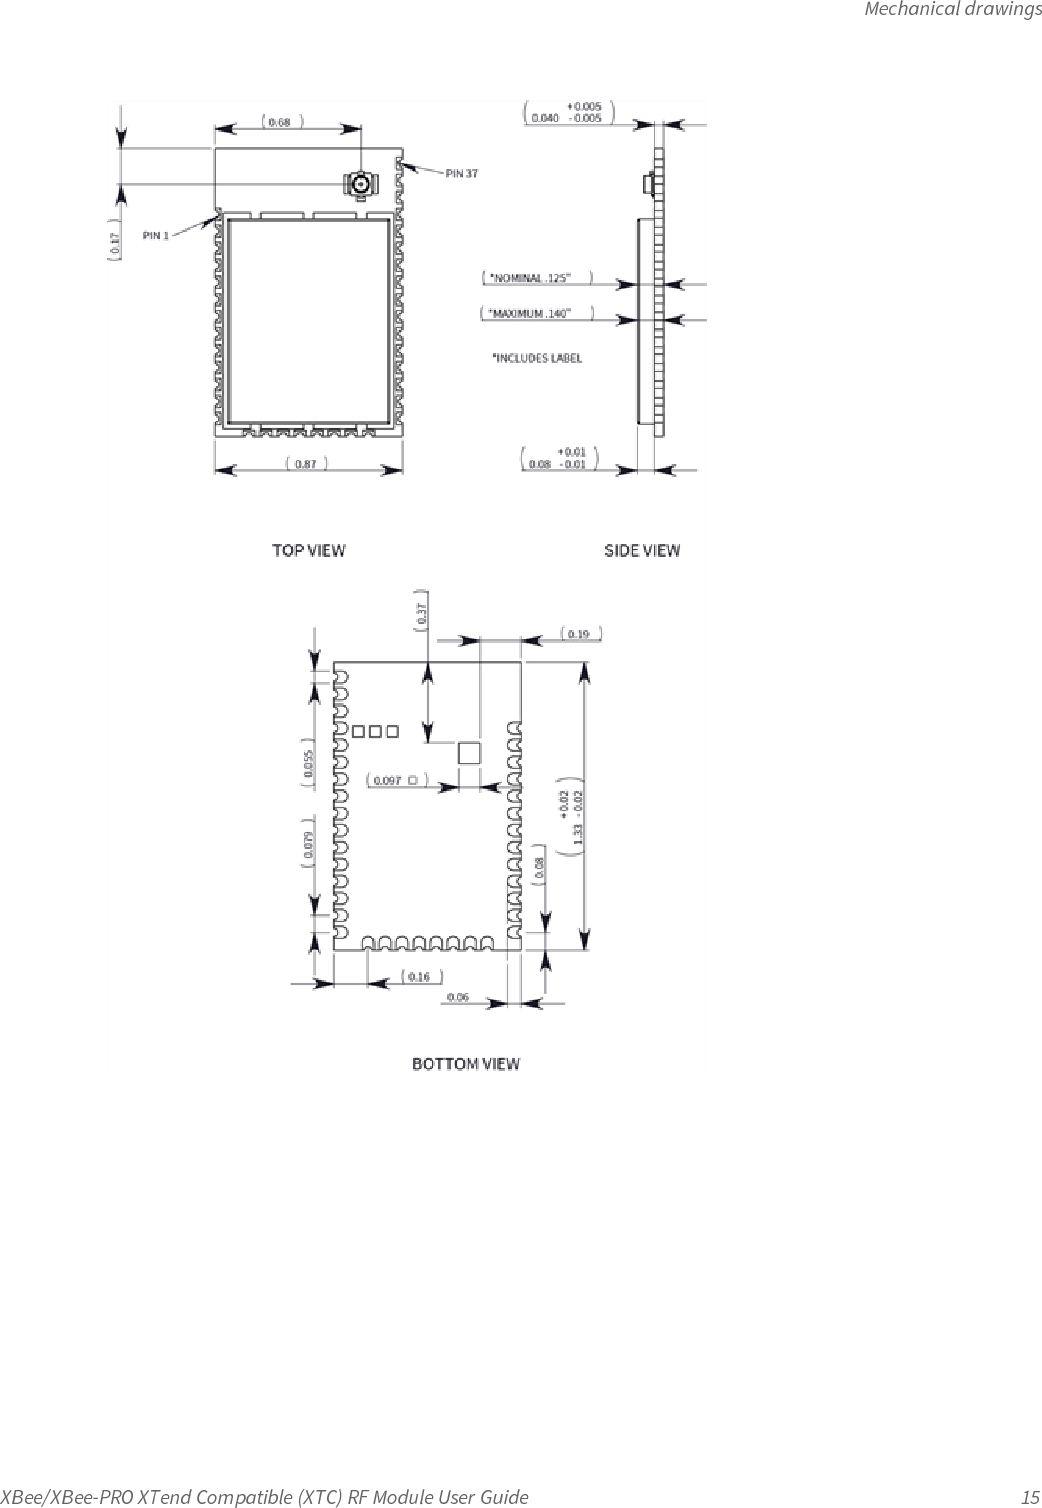 Mechanical drawingsXBee/XBee-PRO XTend Compatible (XTC) RF Module User Guide 15